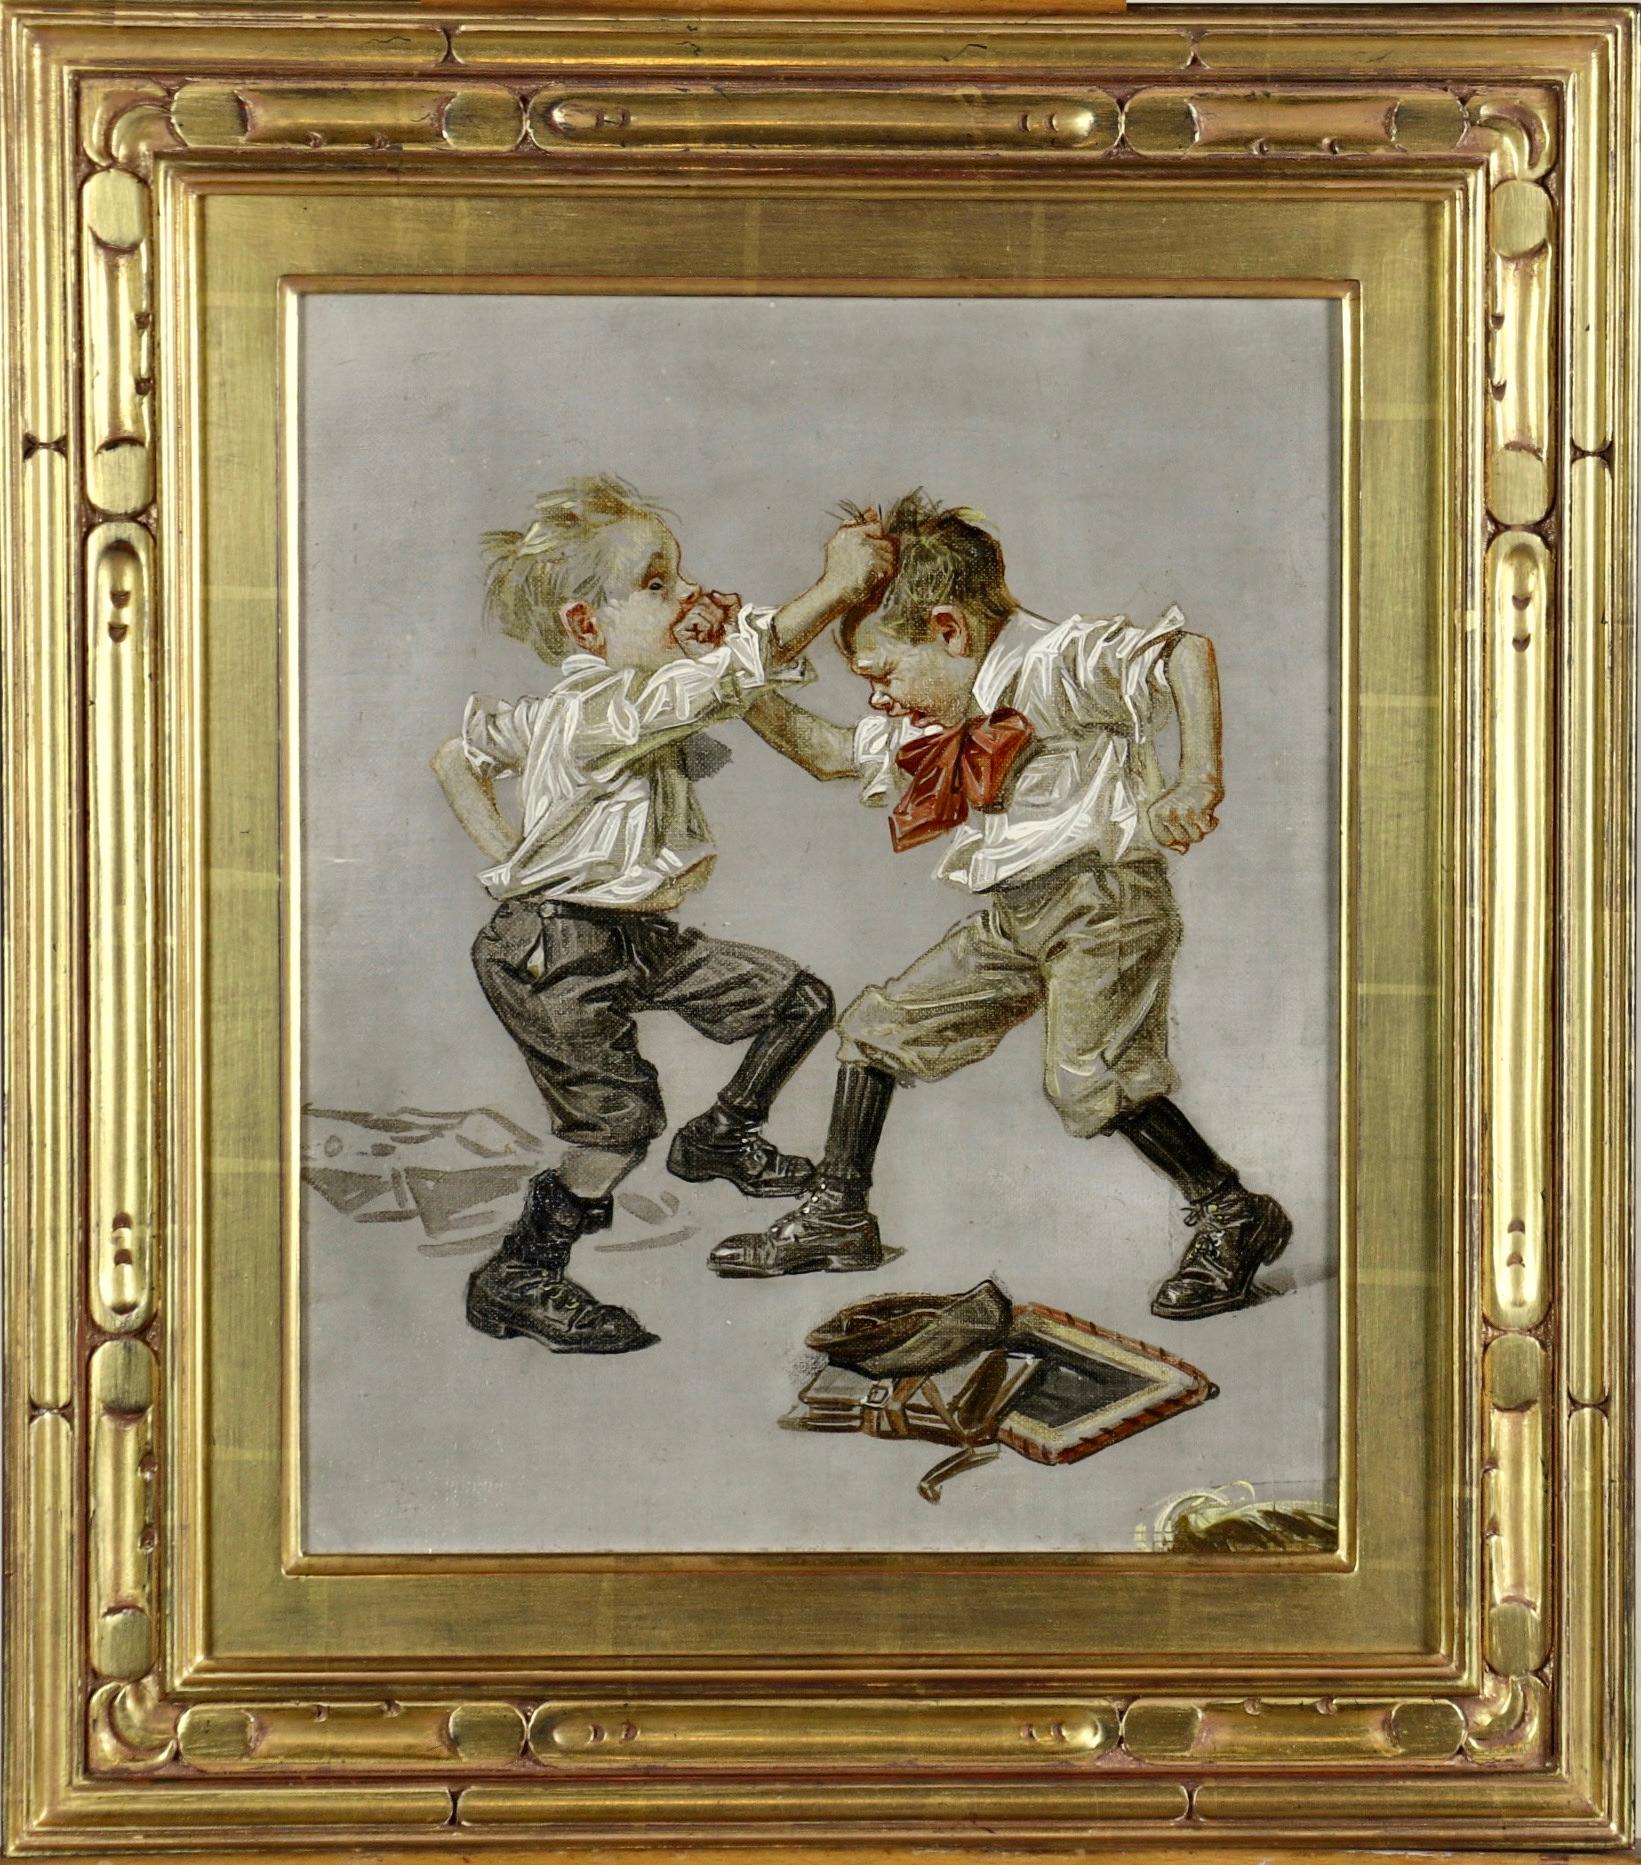 Joseph Christian Leyendecker Figurative Painting – Fight Between Two Boys, Saturday Evening, Post-Deckelstudie